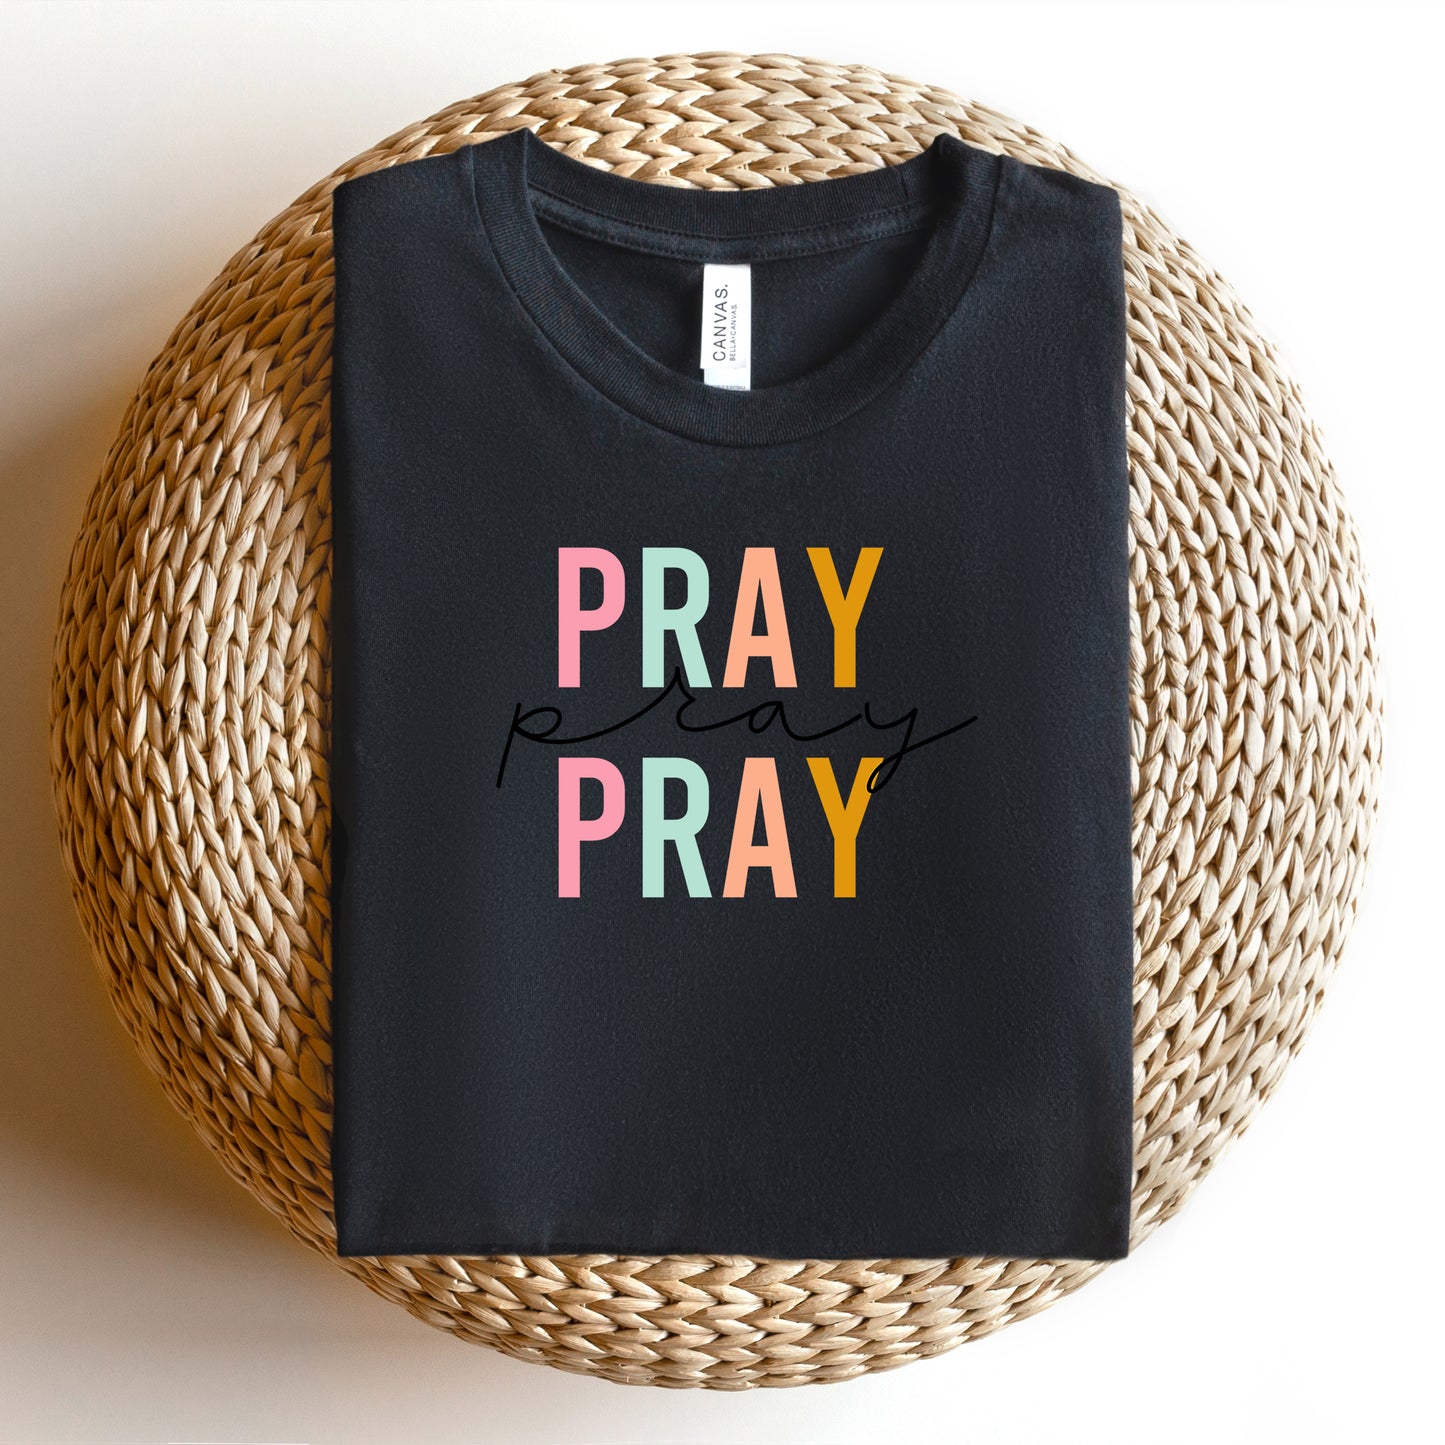 Pray Pray Pray Colorful | Short Sleeve Crew Neck